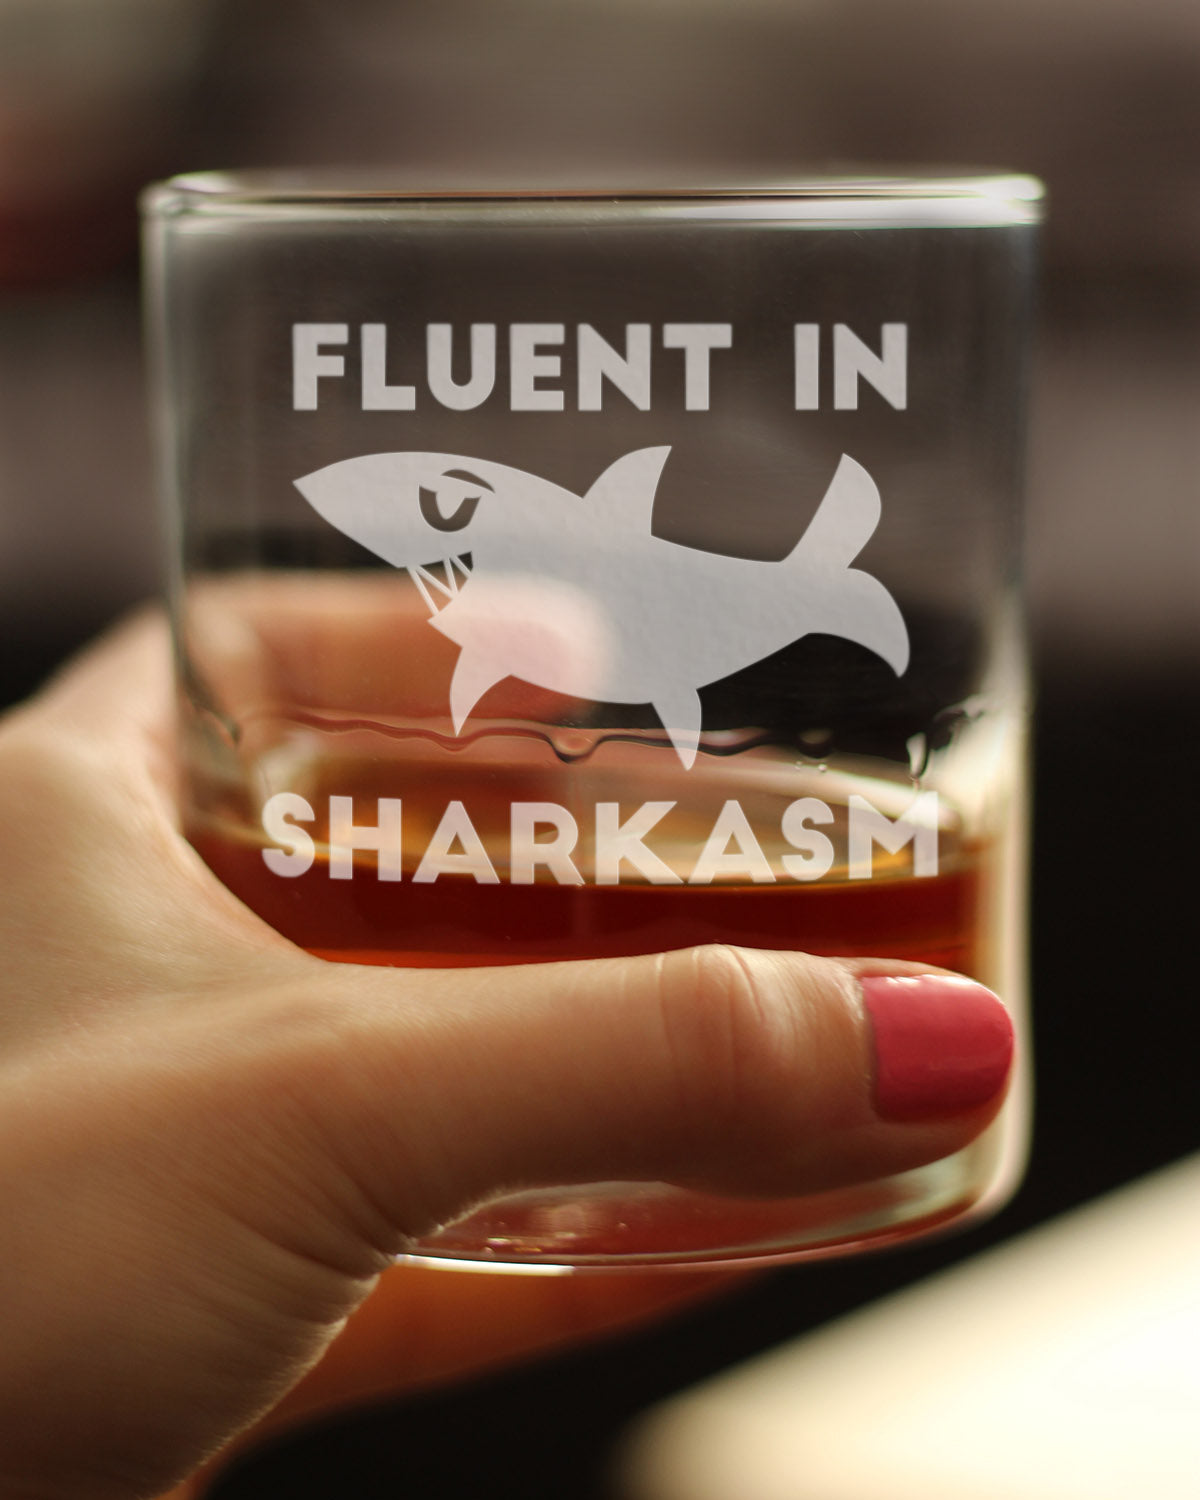 Fluent in Sharkasm - Funny Shark Whiskey Rocks Glass Gifts for Sarcastic Men &amp; Women - Fun Whisky Drinking Tumbler Décor